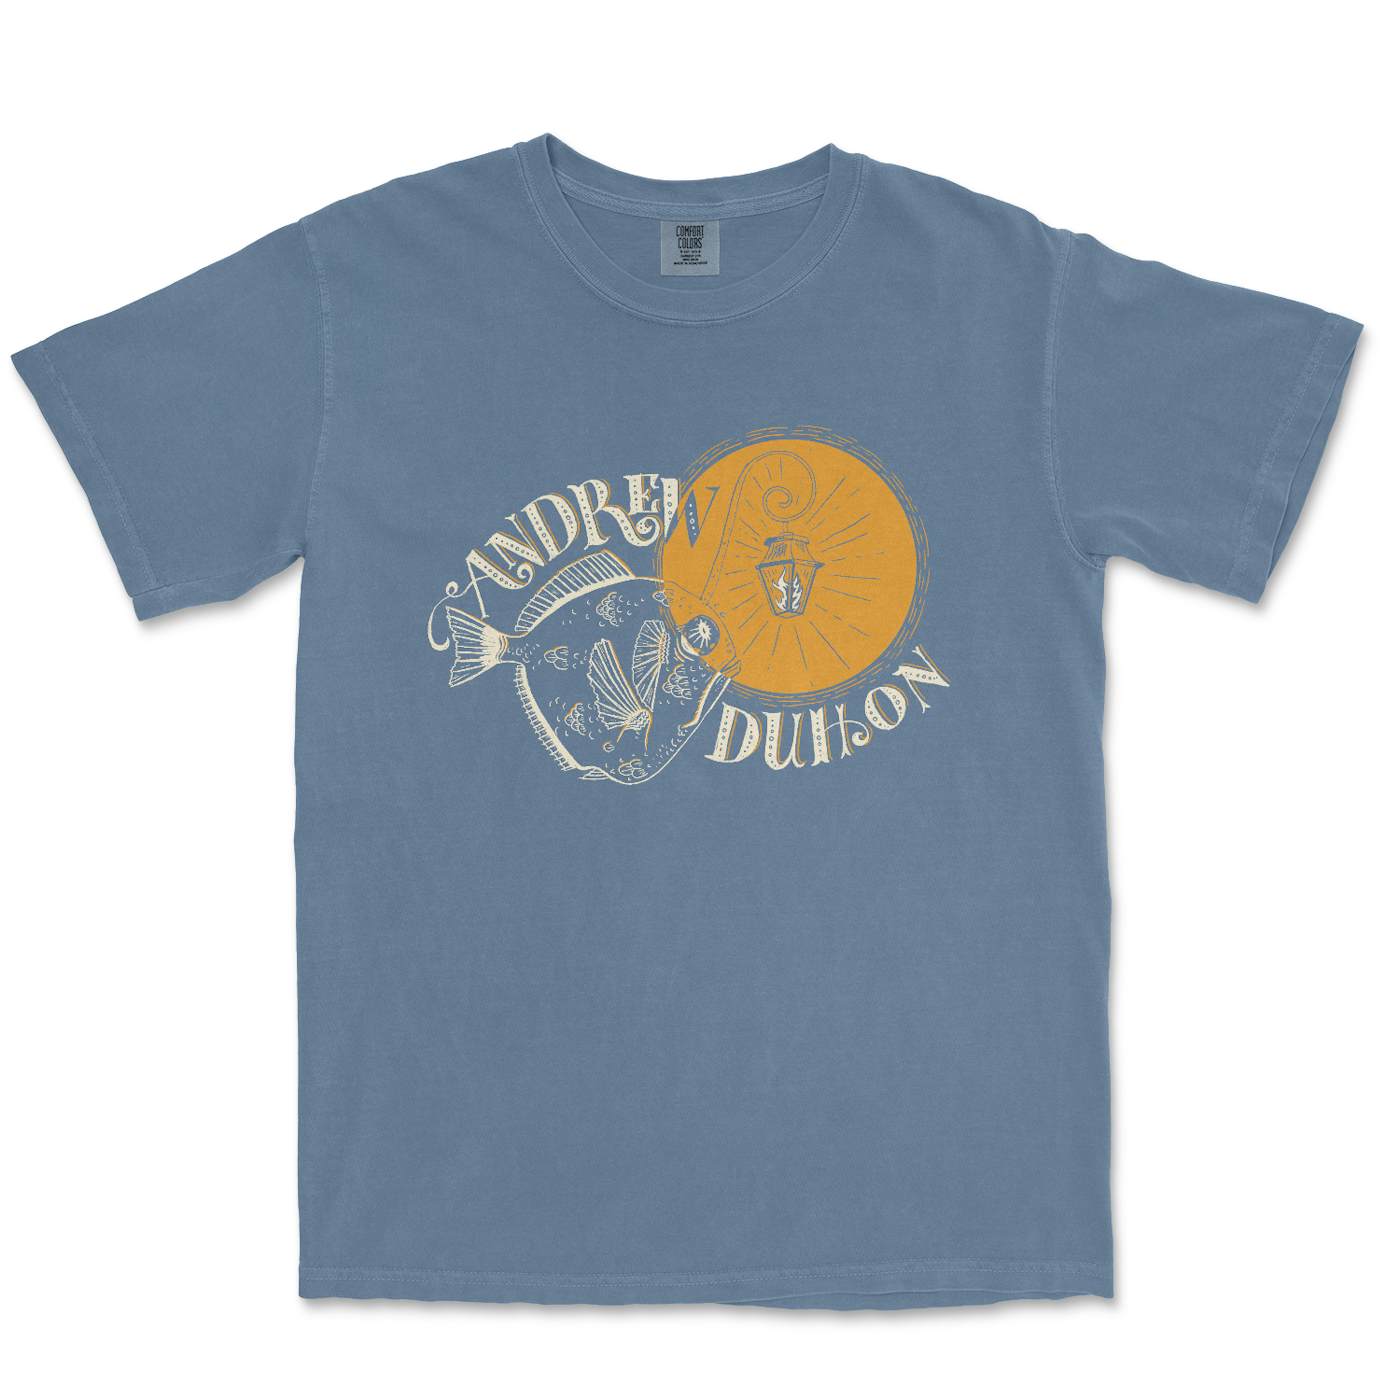 Andrew Duhon Fish Light Unisex T-Shirt - Blue Jean